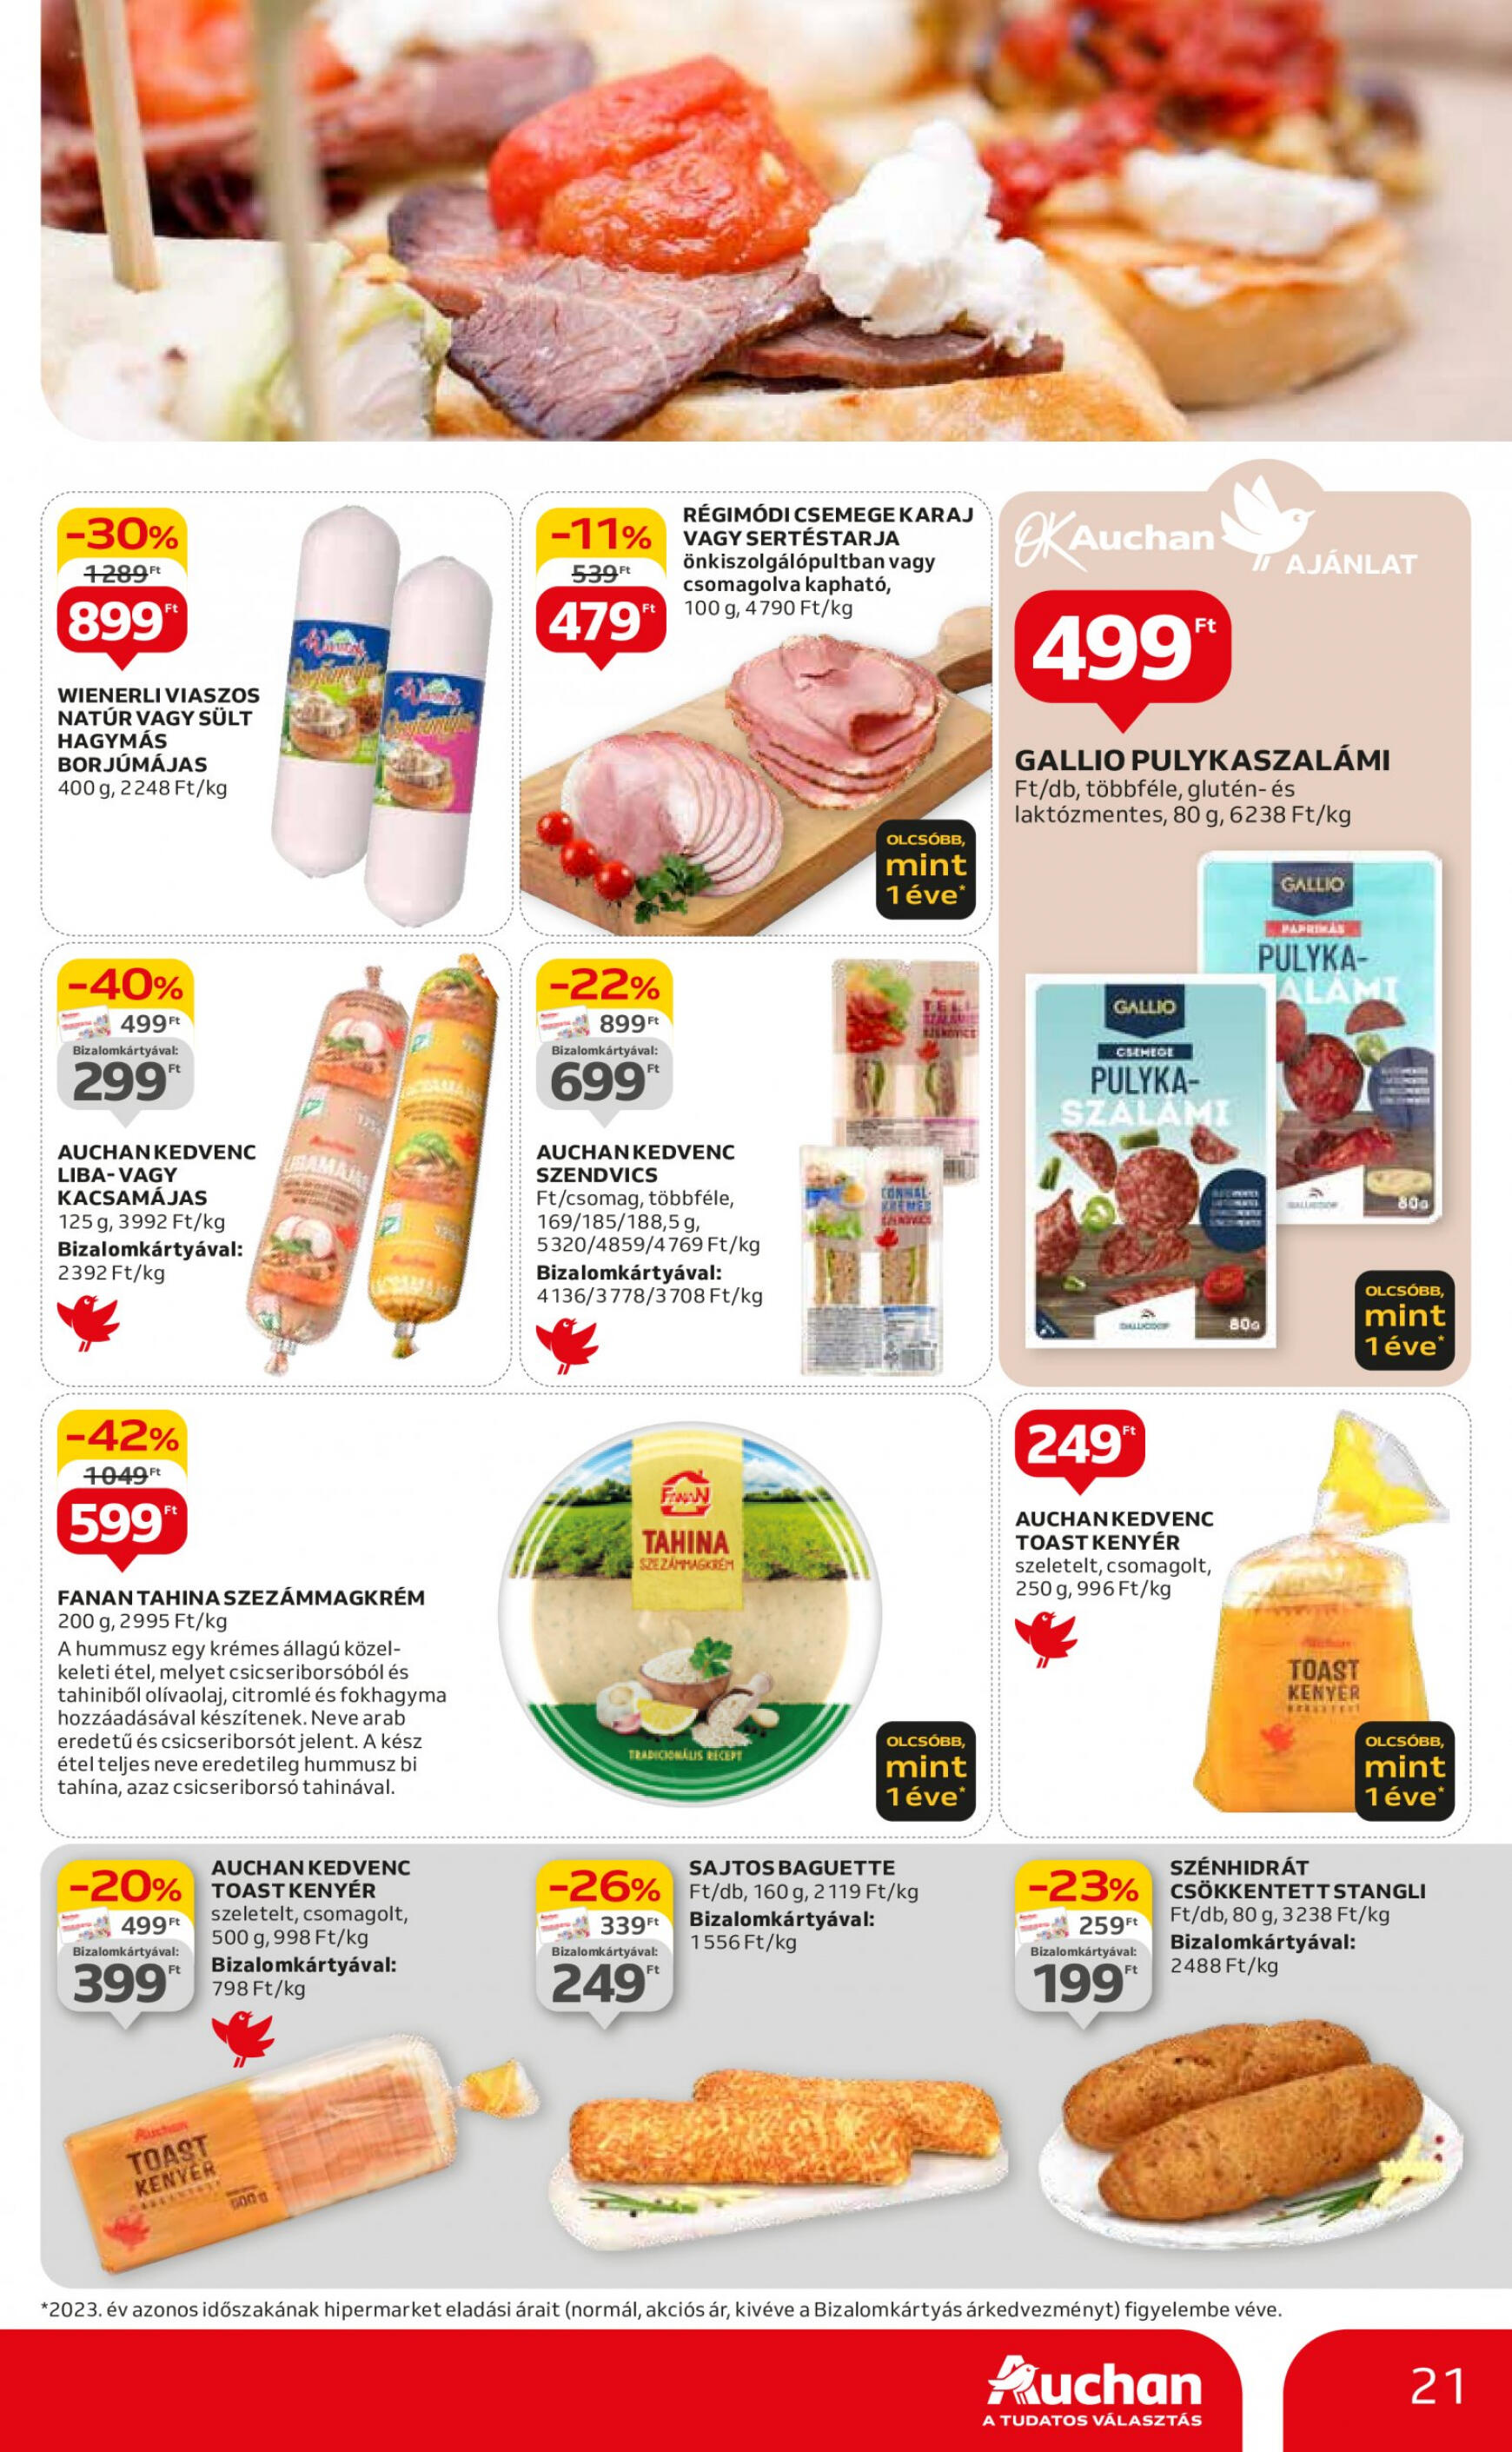 auchan - Aktuális újság Auchan 04.25. - 04.30. - page: 21